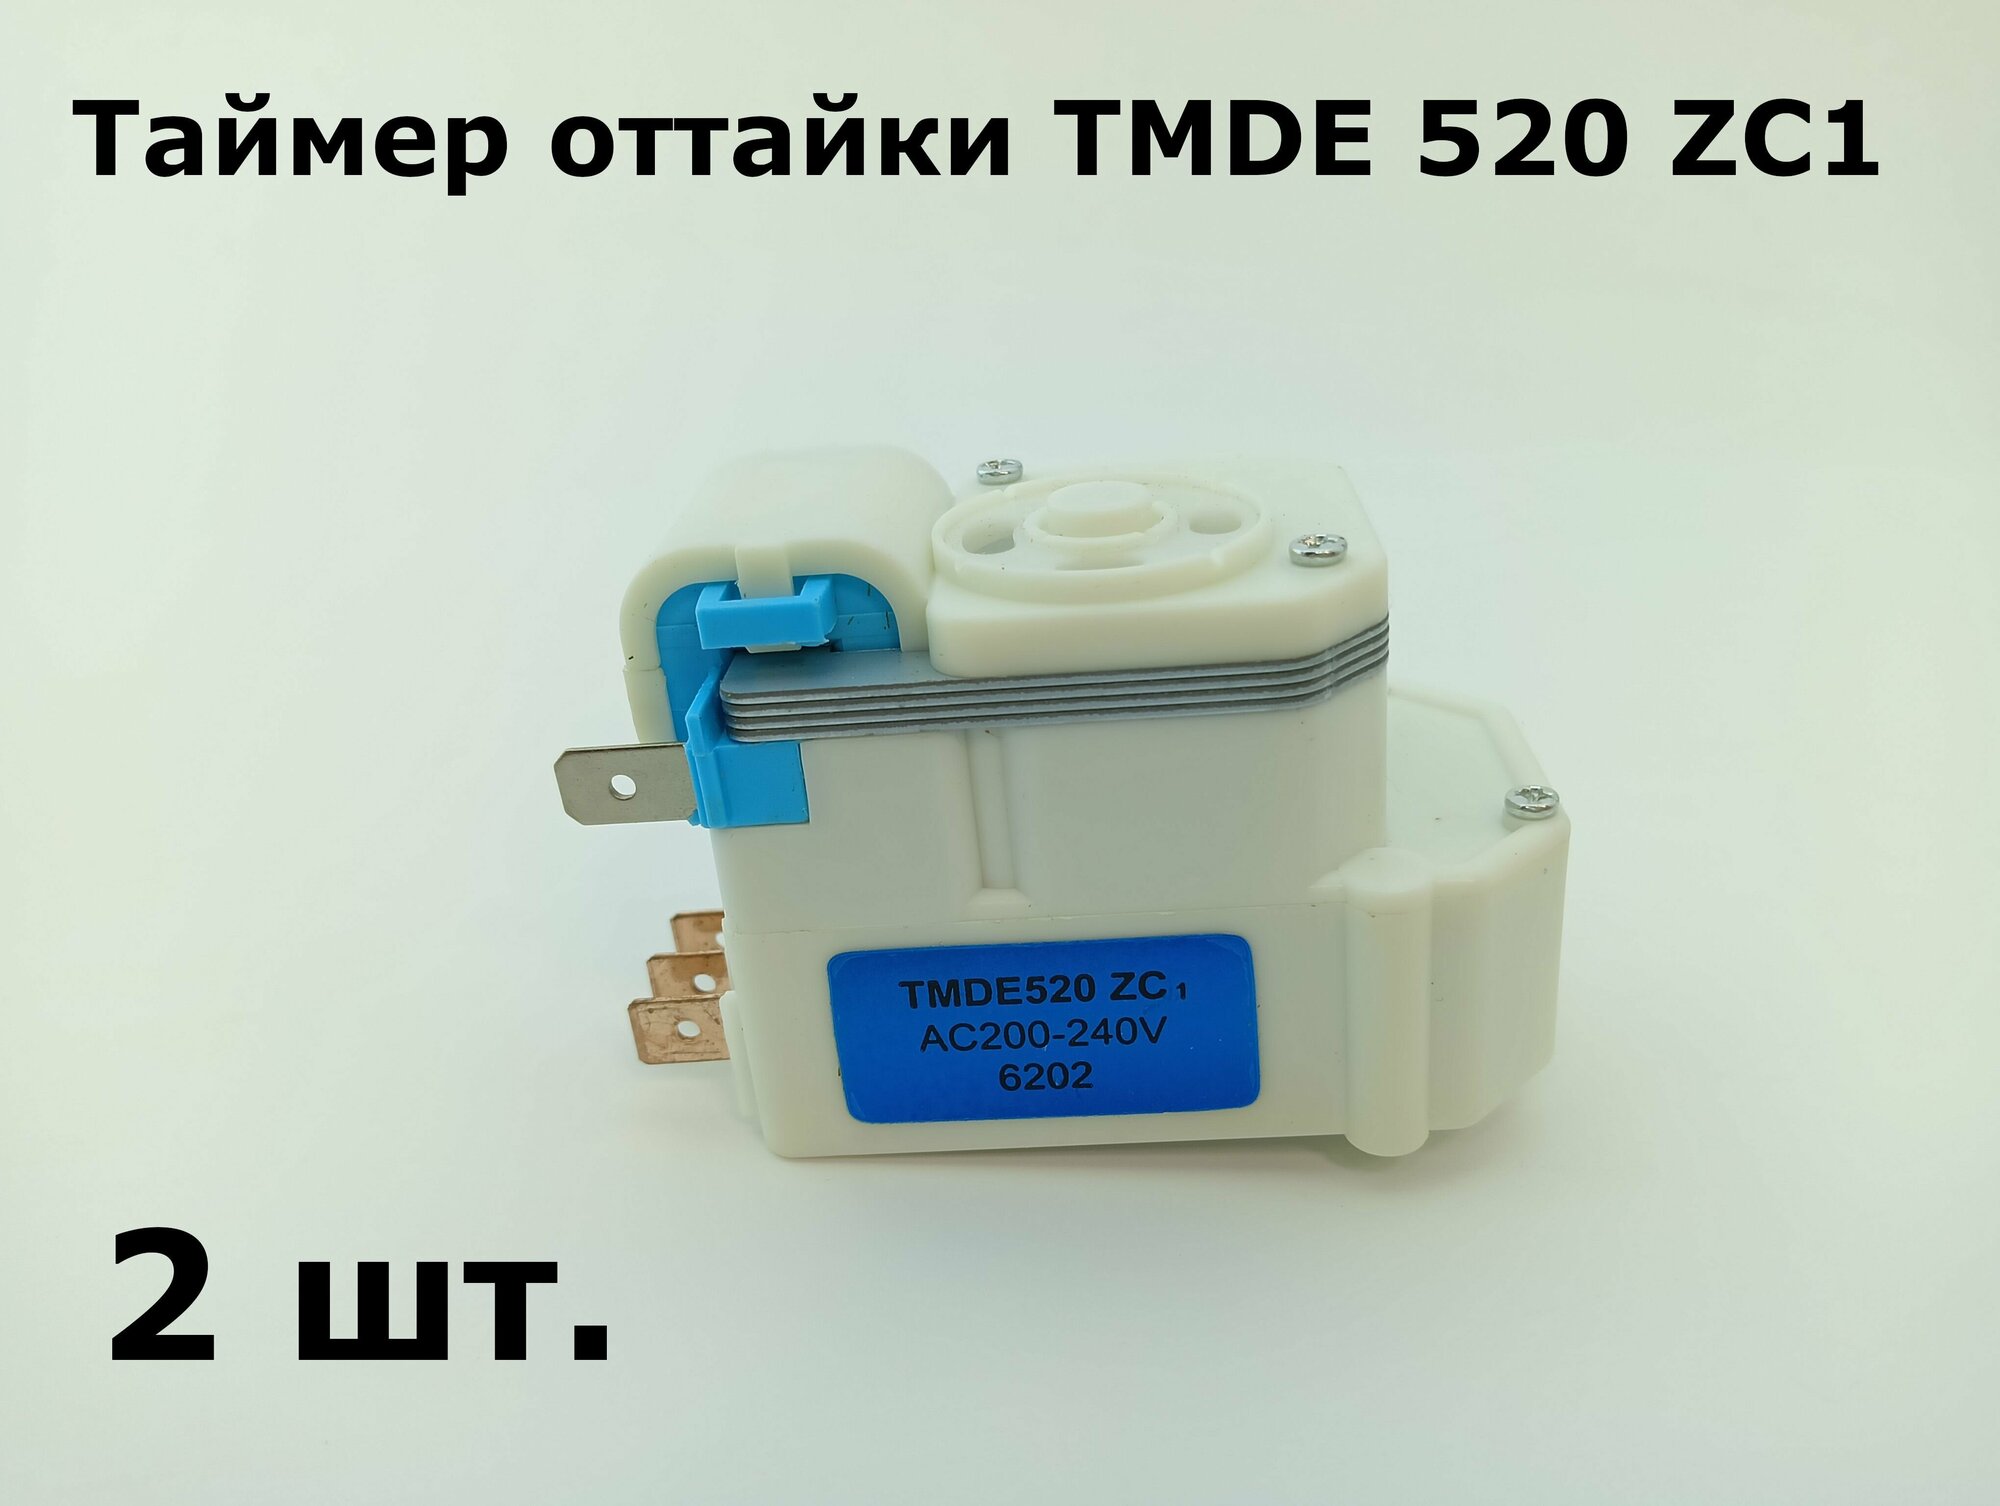 Таймер оттайки холодильника No Frost TMDE 520 ZC1 - 2 шт.